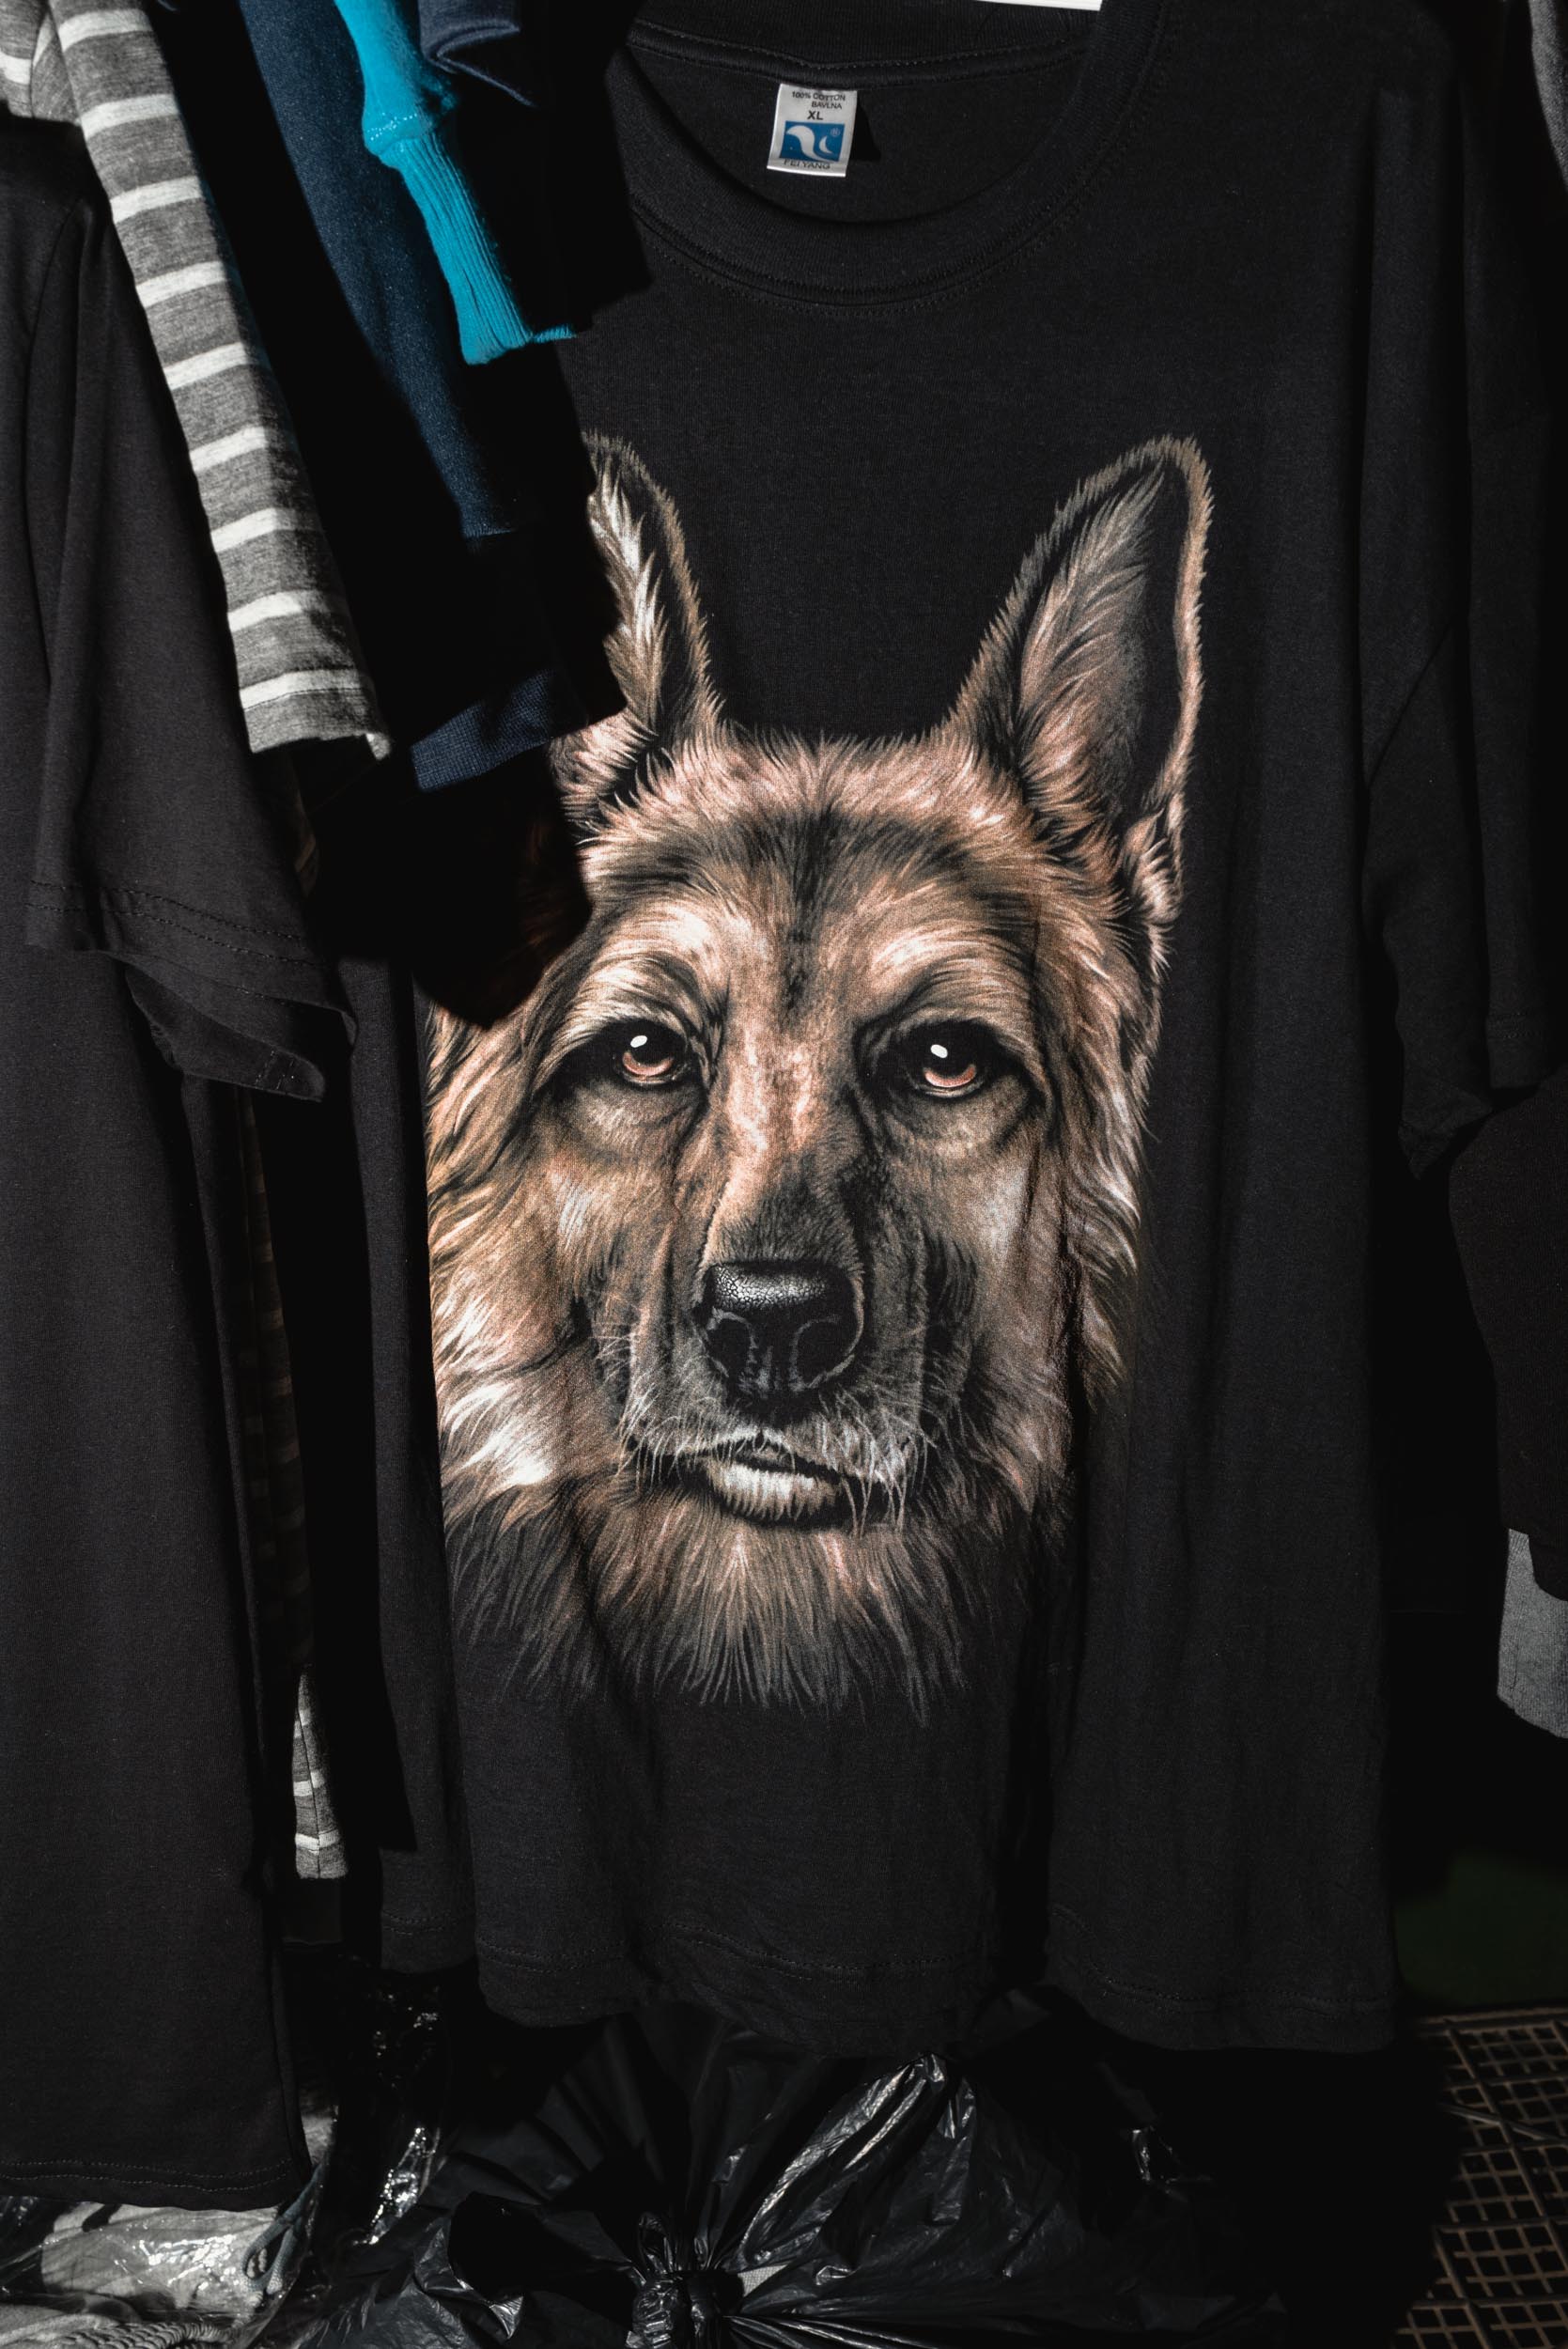 Dog head t-shirt at Marketplace Miletičova